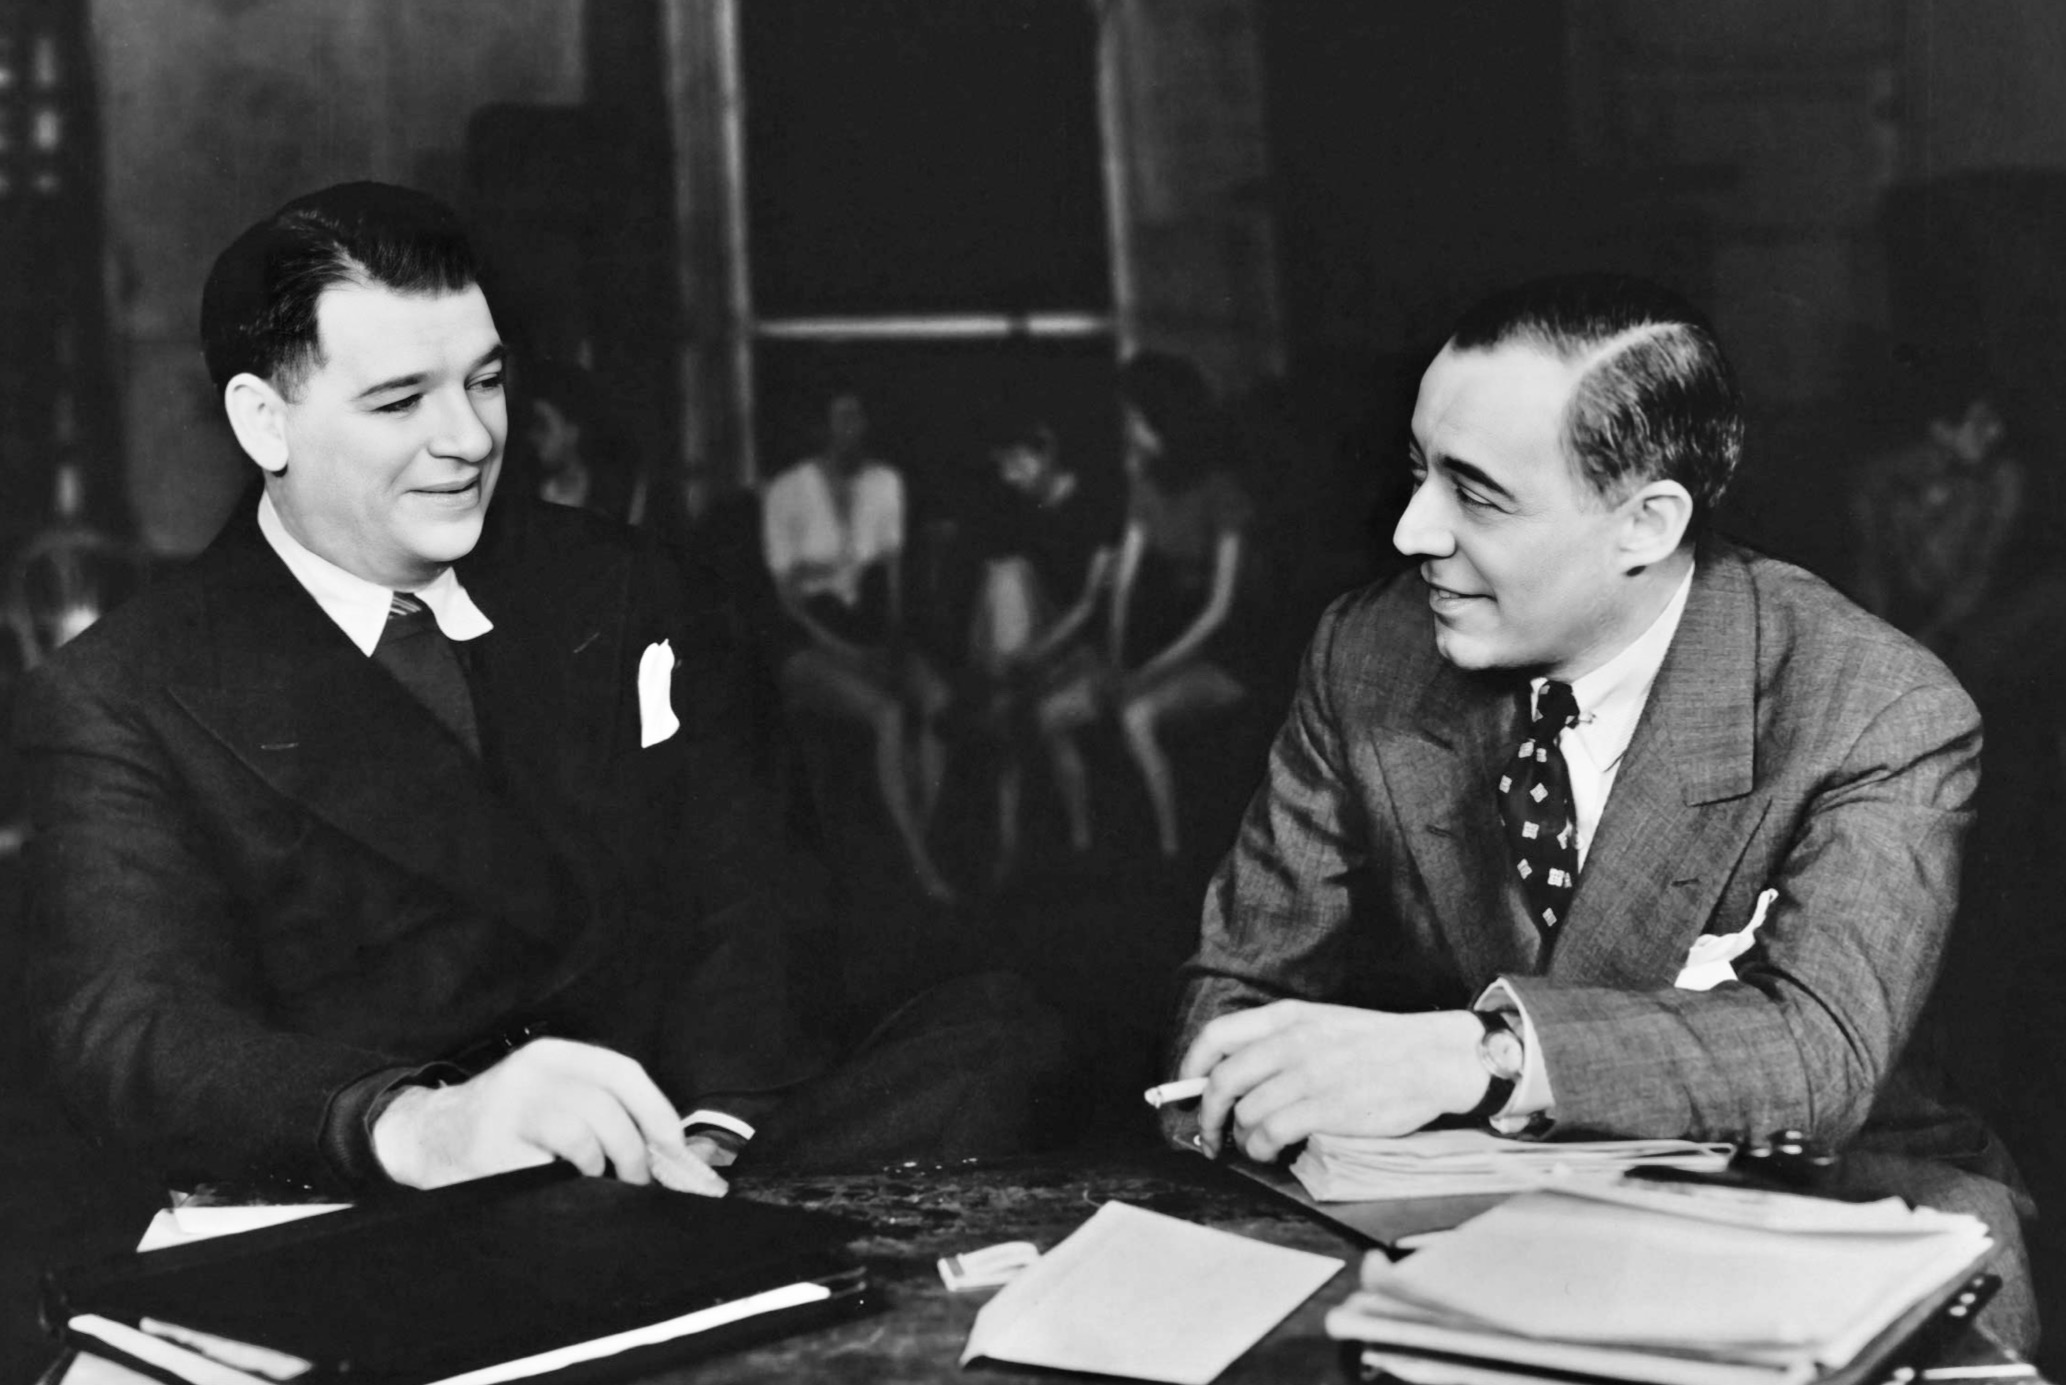 lyricist Oscar Hammerstein II and composer Richard Rodgers, c. 1943